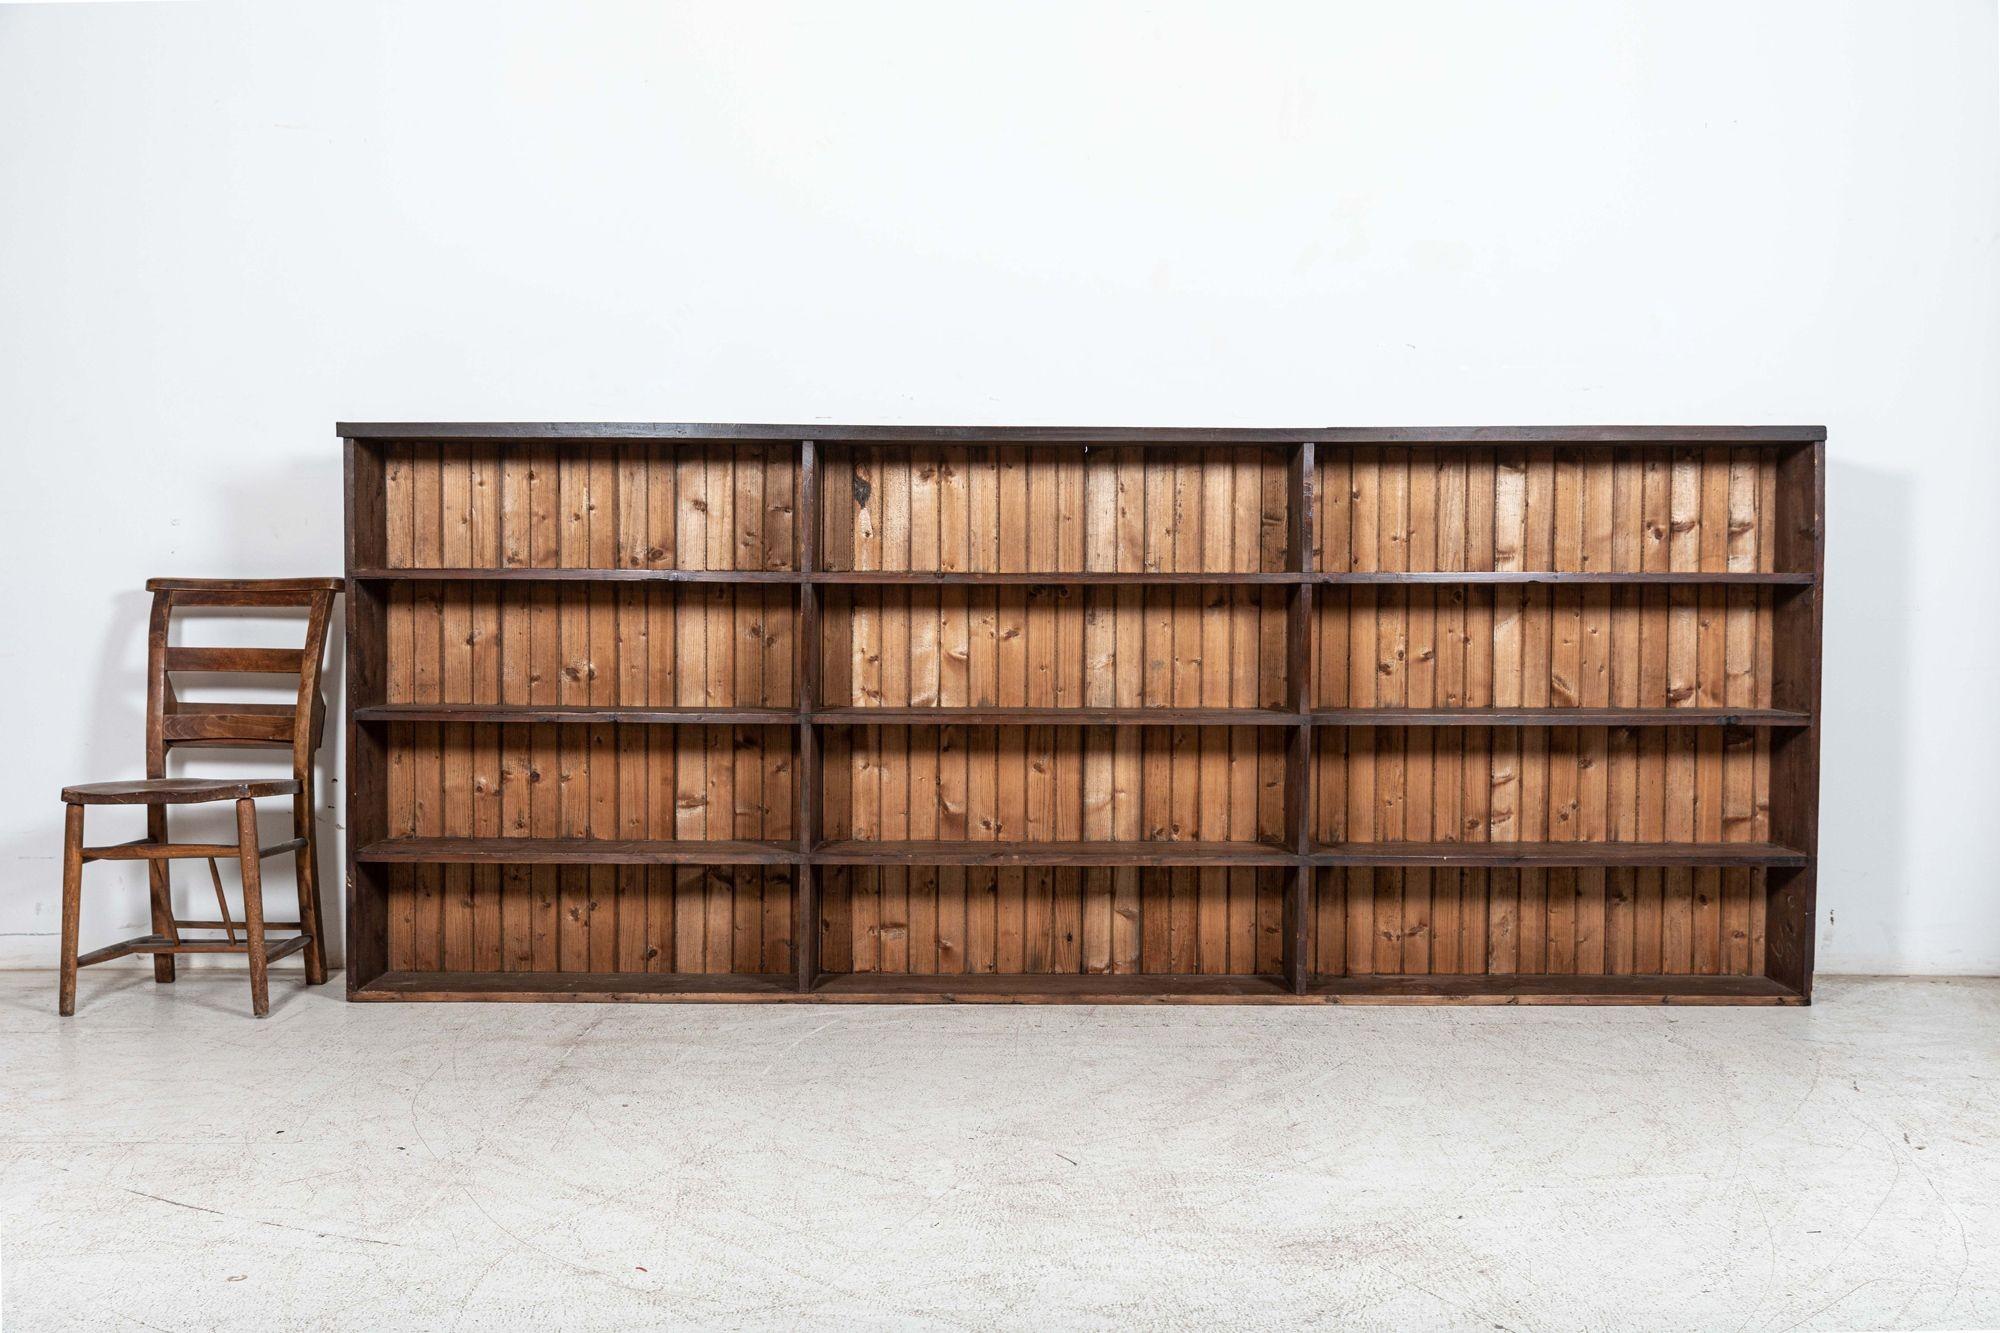 Circa 1890
Monumental English 19th C Ironmongers open Pine Bookcase Cabinet in original colour
Measures: W 286 x D 25 x H 113 cm.
   